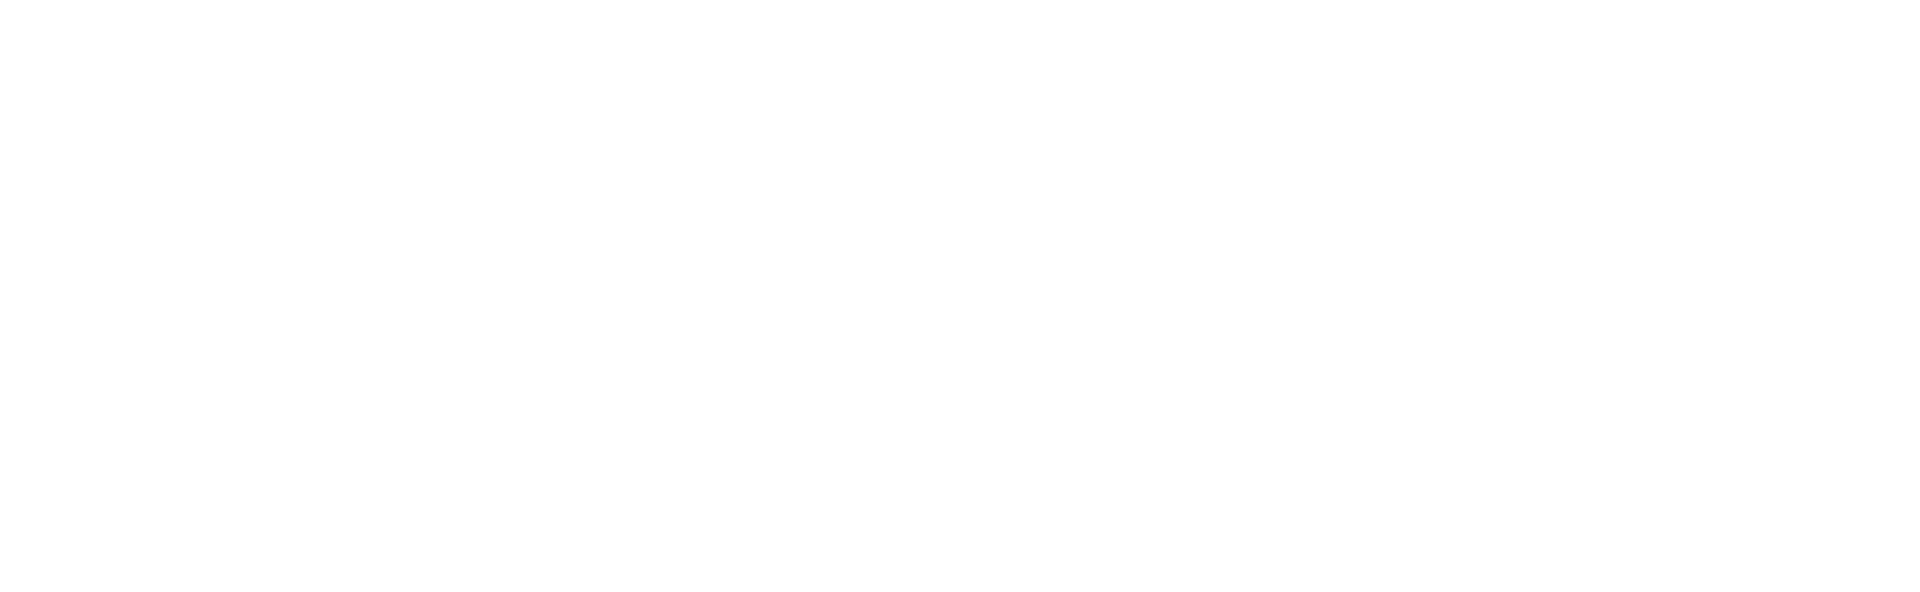 McBee's Coffee N Carwash